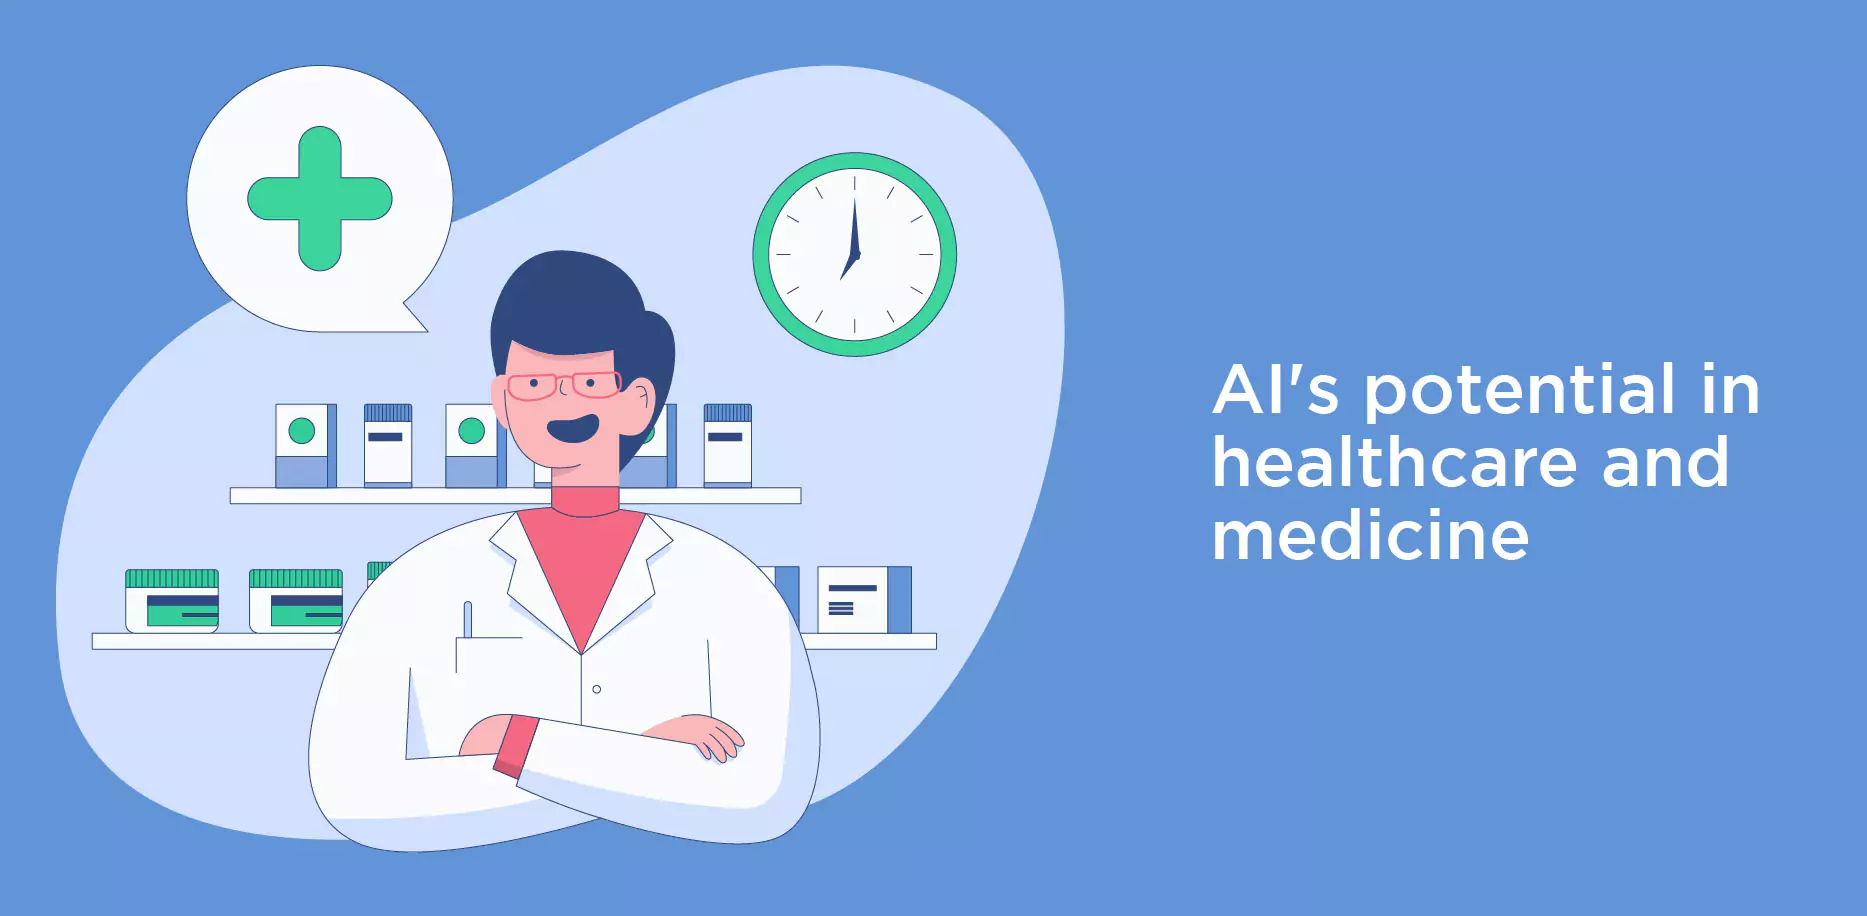 AI's potential in healthcare and medicine